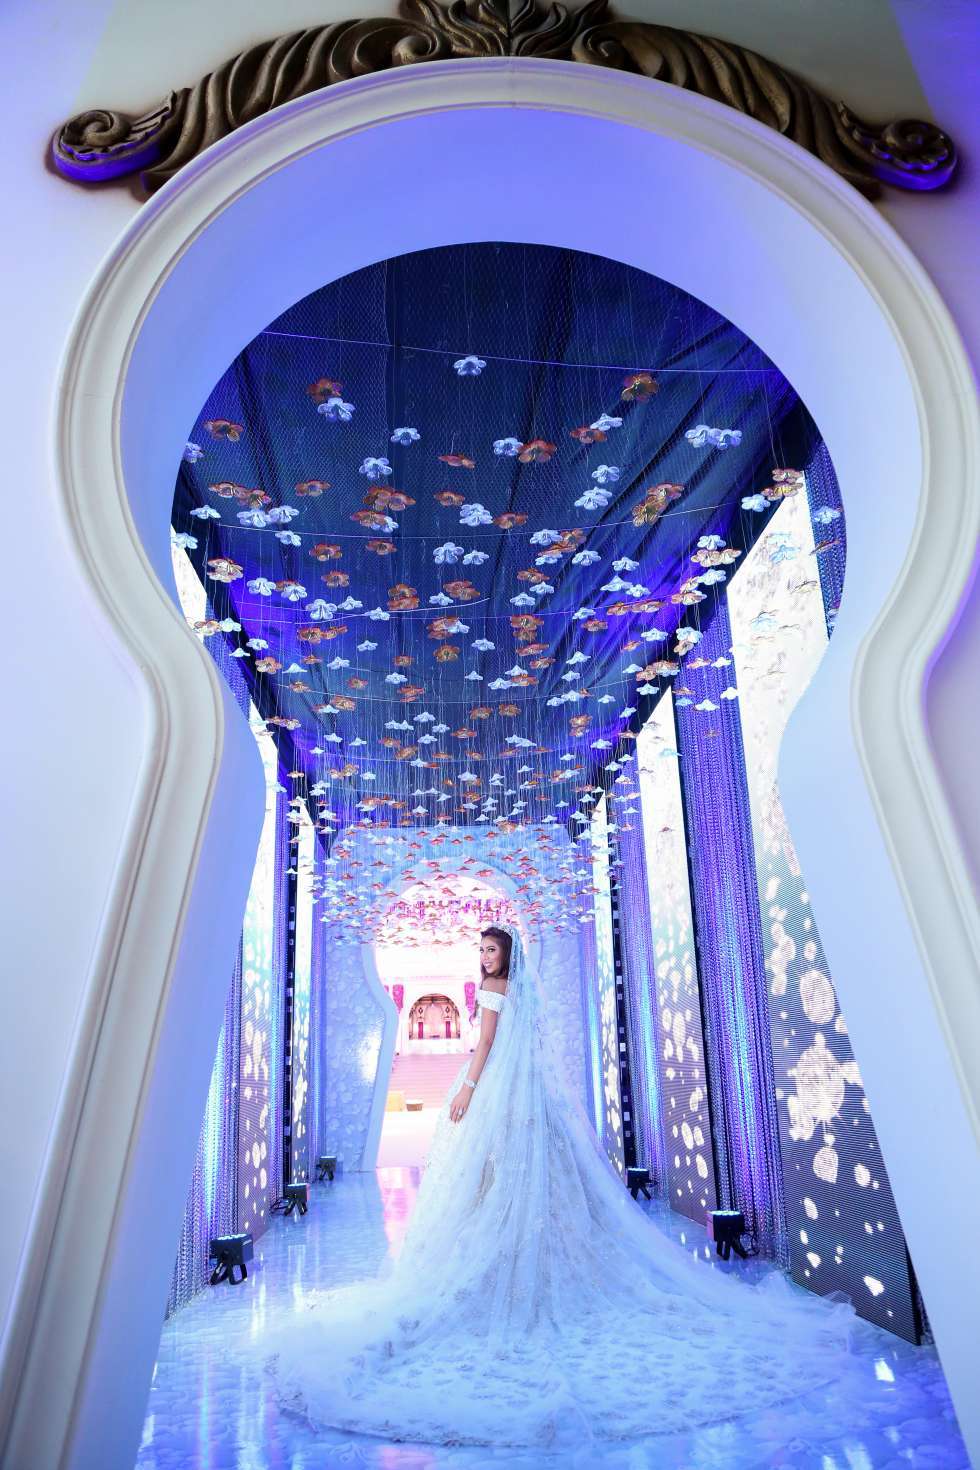 A Fairytale Wedding in Lebanon by Fadi Fattouh